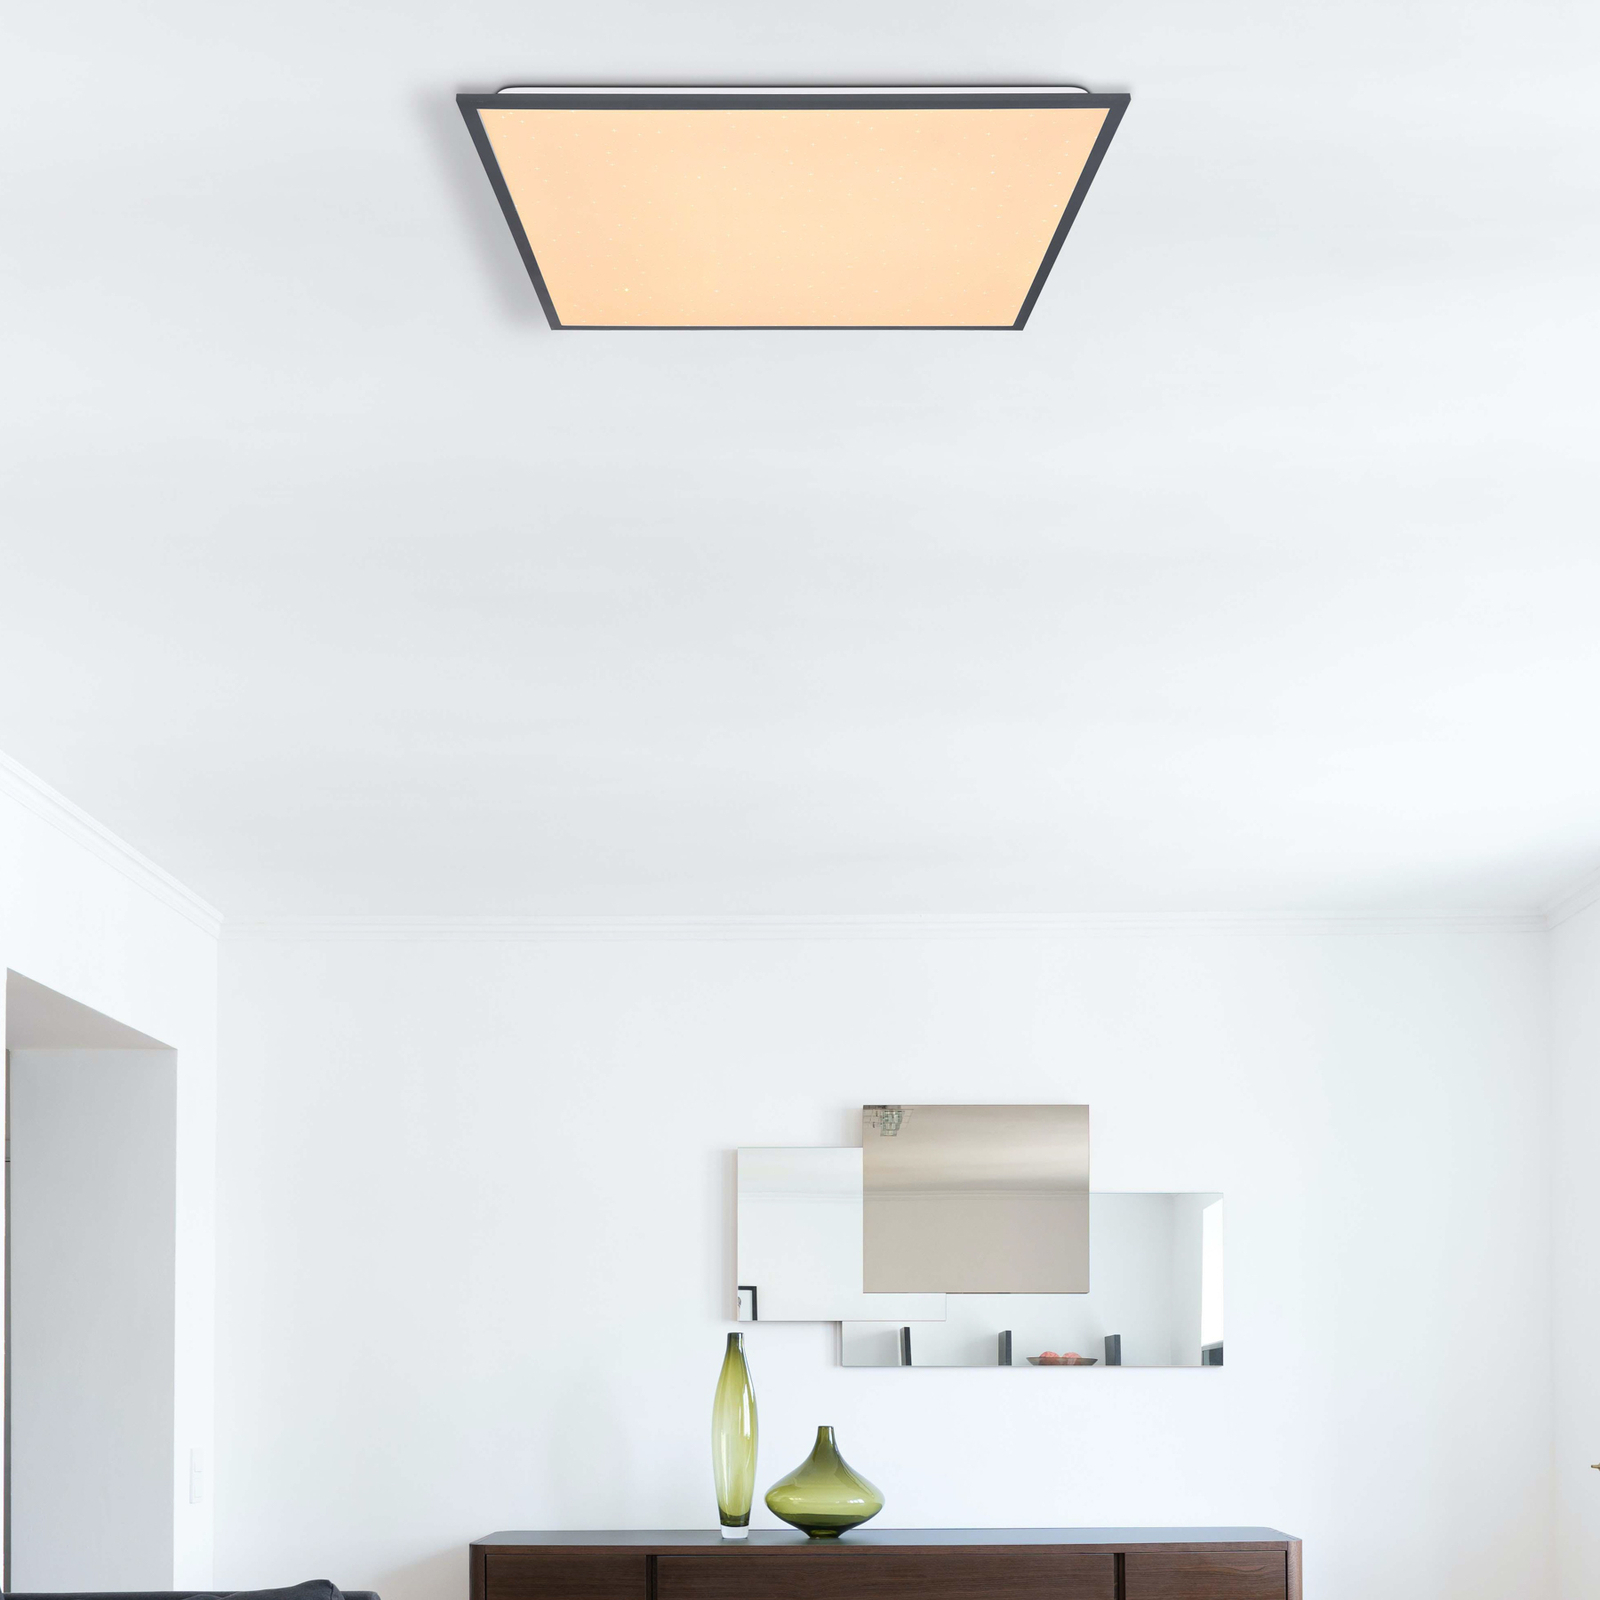 Doro plafondlamp, lengte 59 cm, wit/grafiet, aluminium